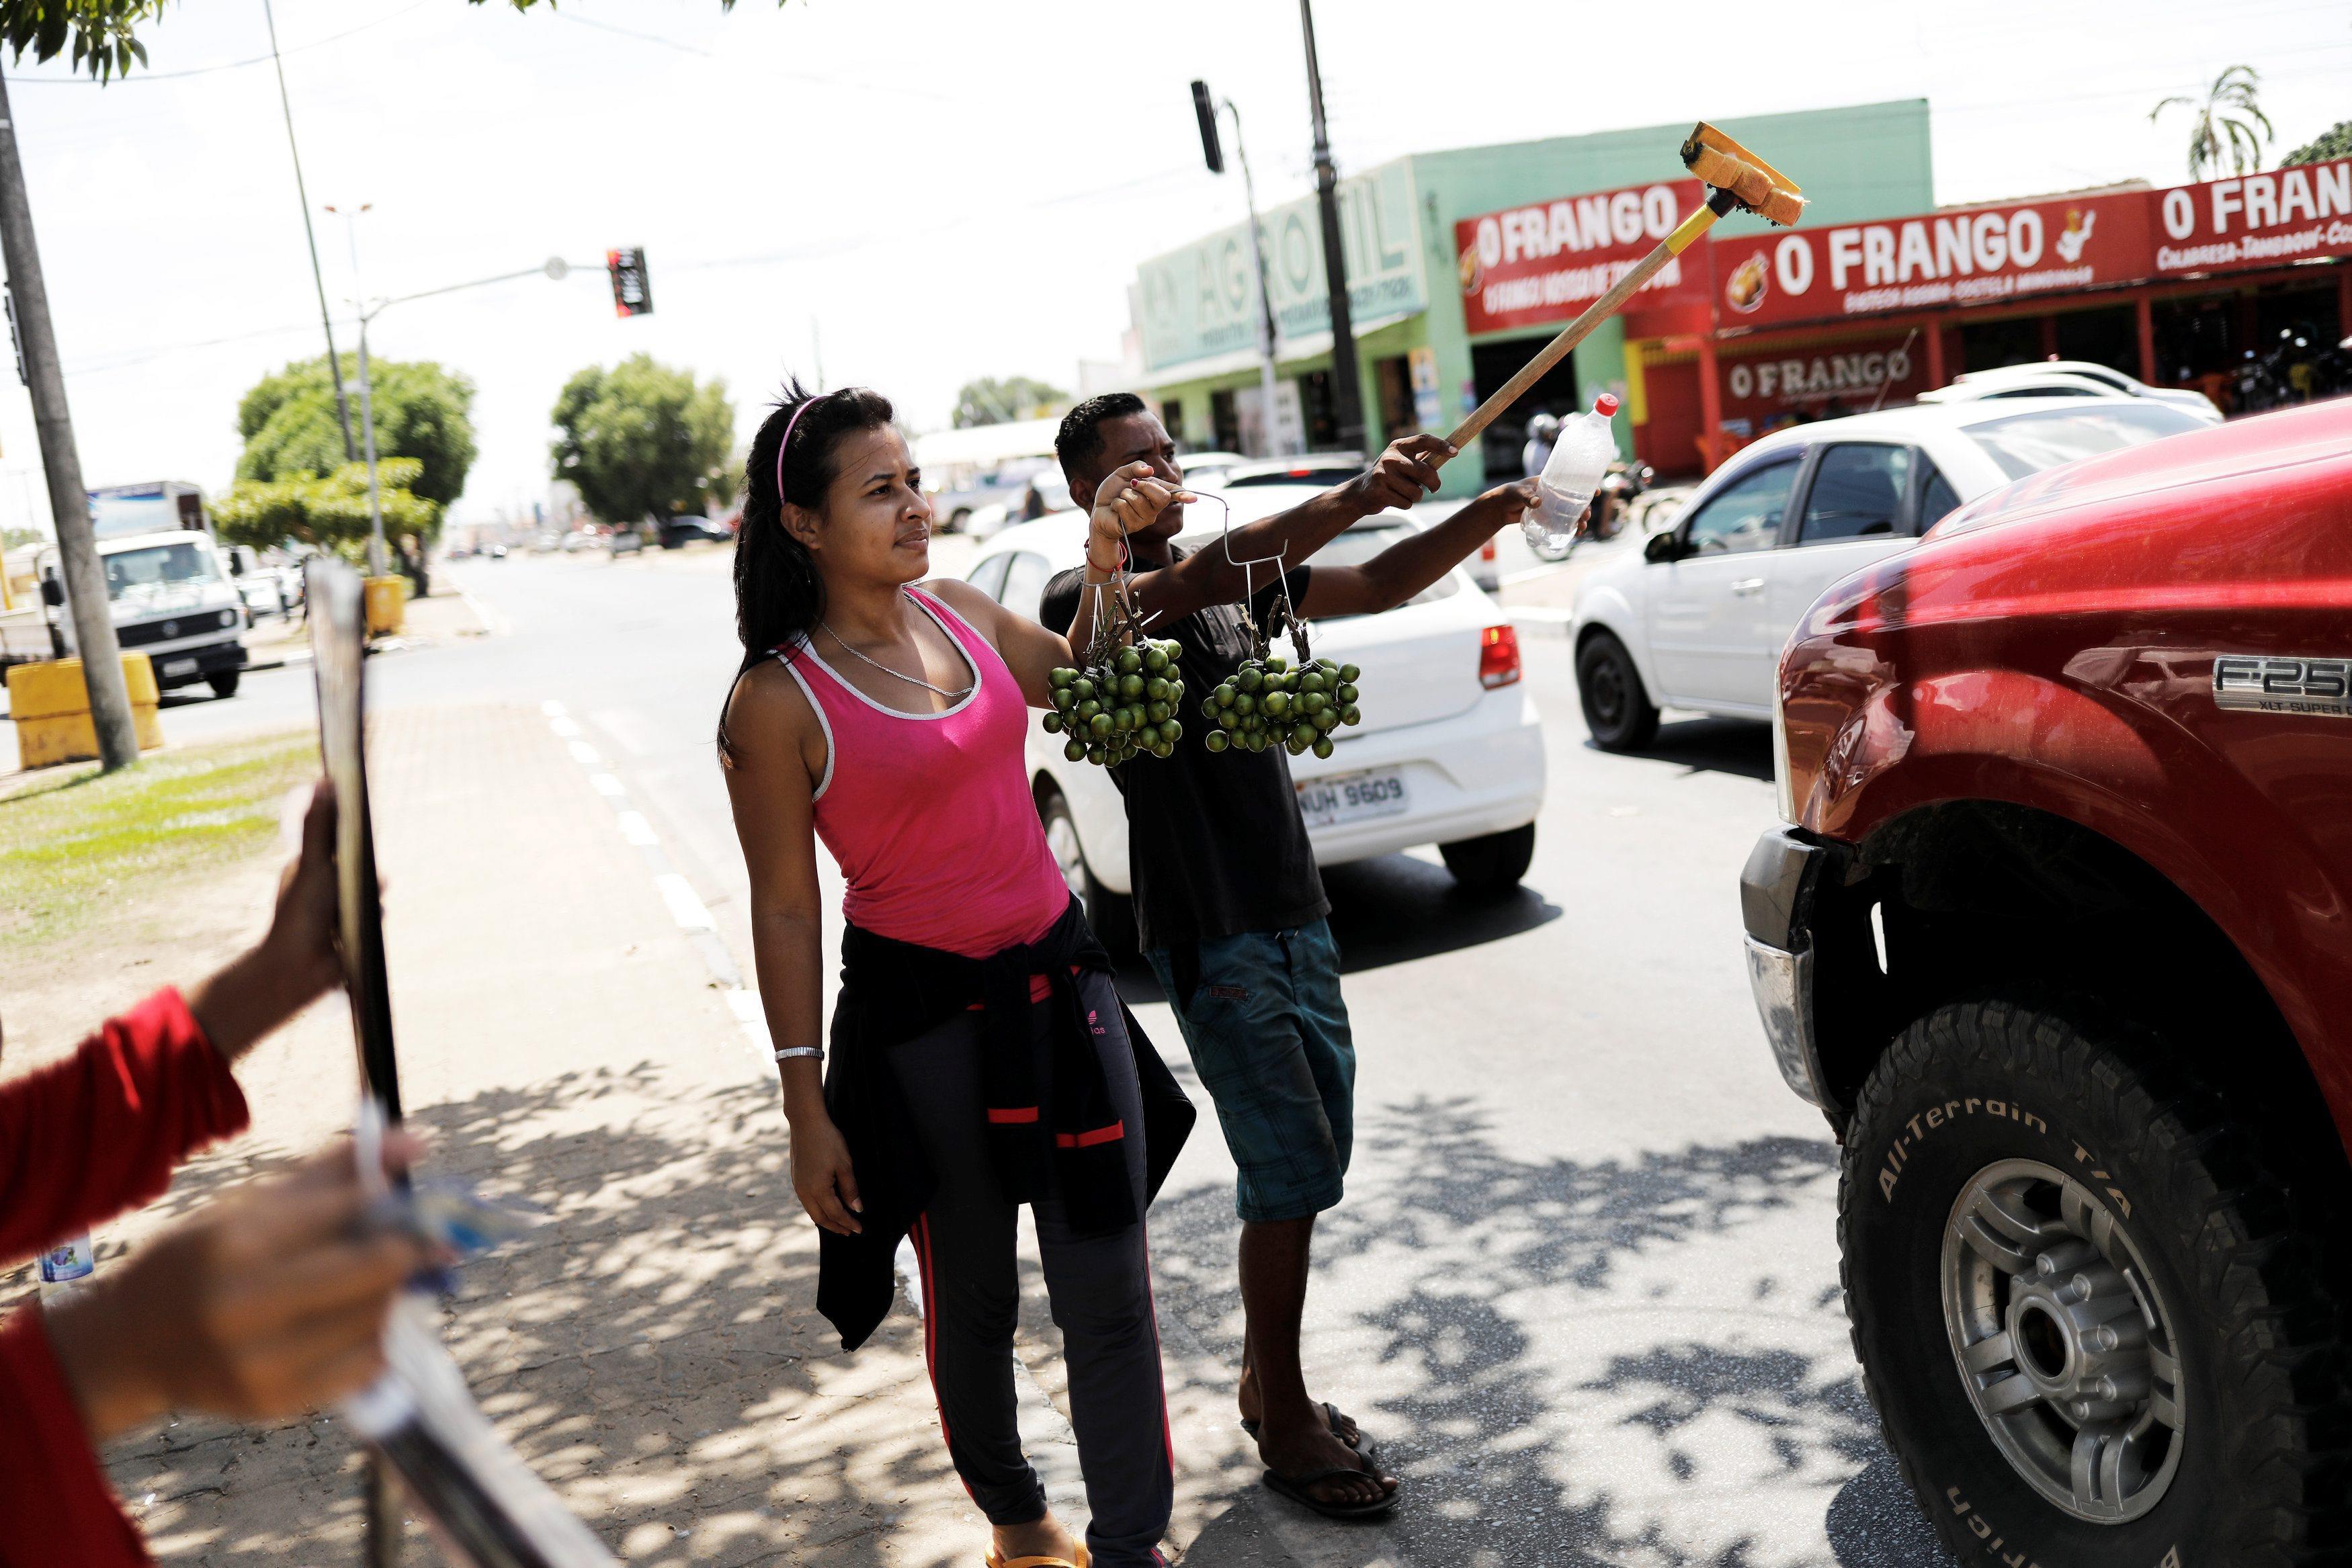 The Wider Image: Venezuelan migrants pose humanitarian problem in Brazil